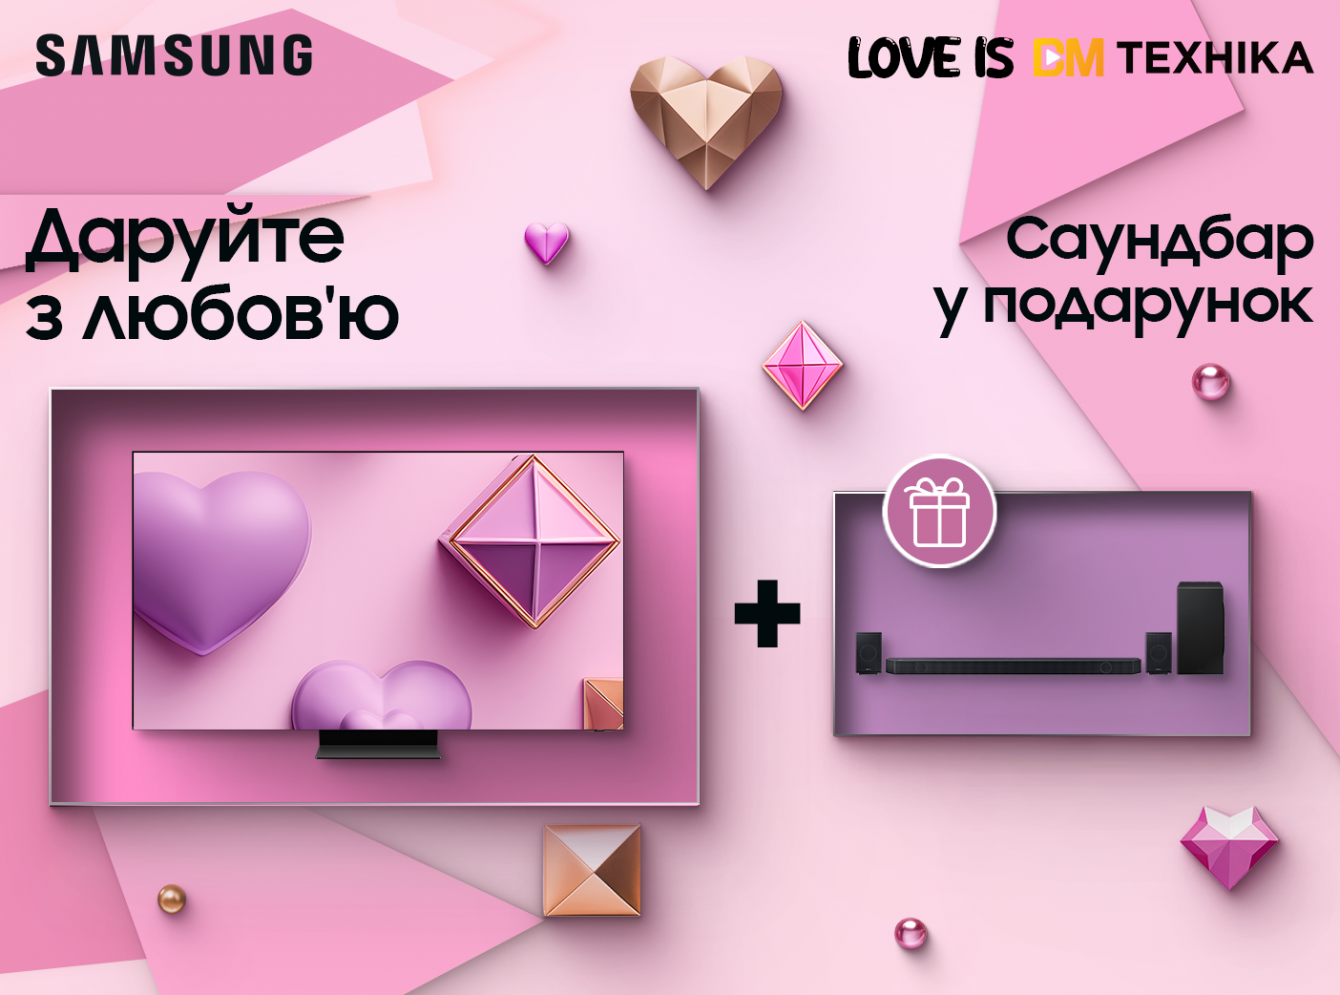 Даруйте Samsung з любов'ю